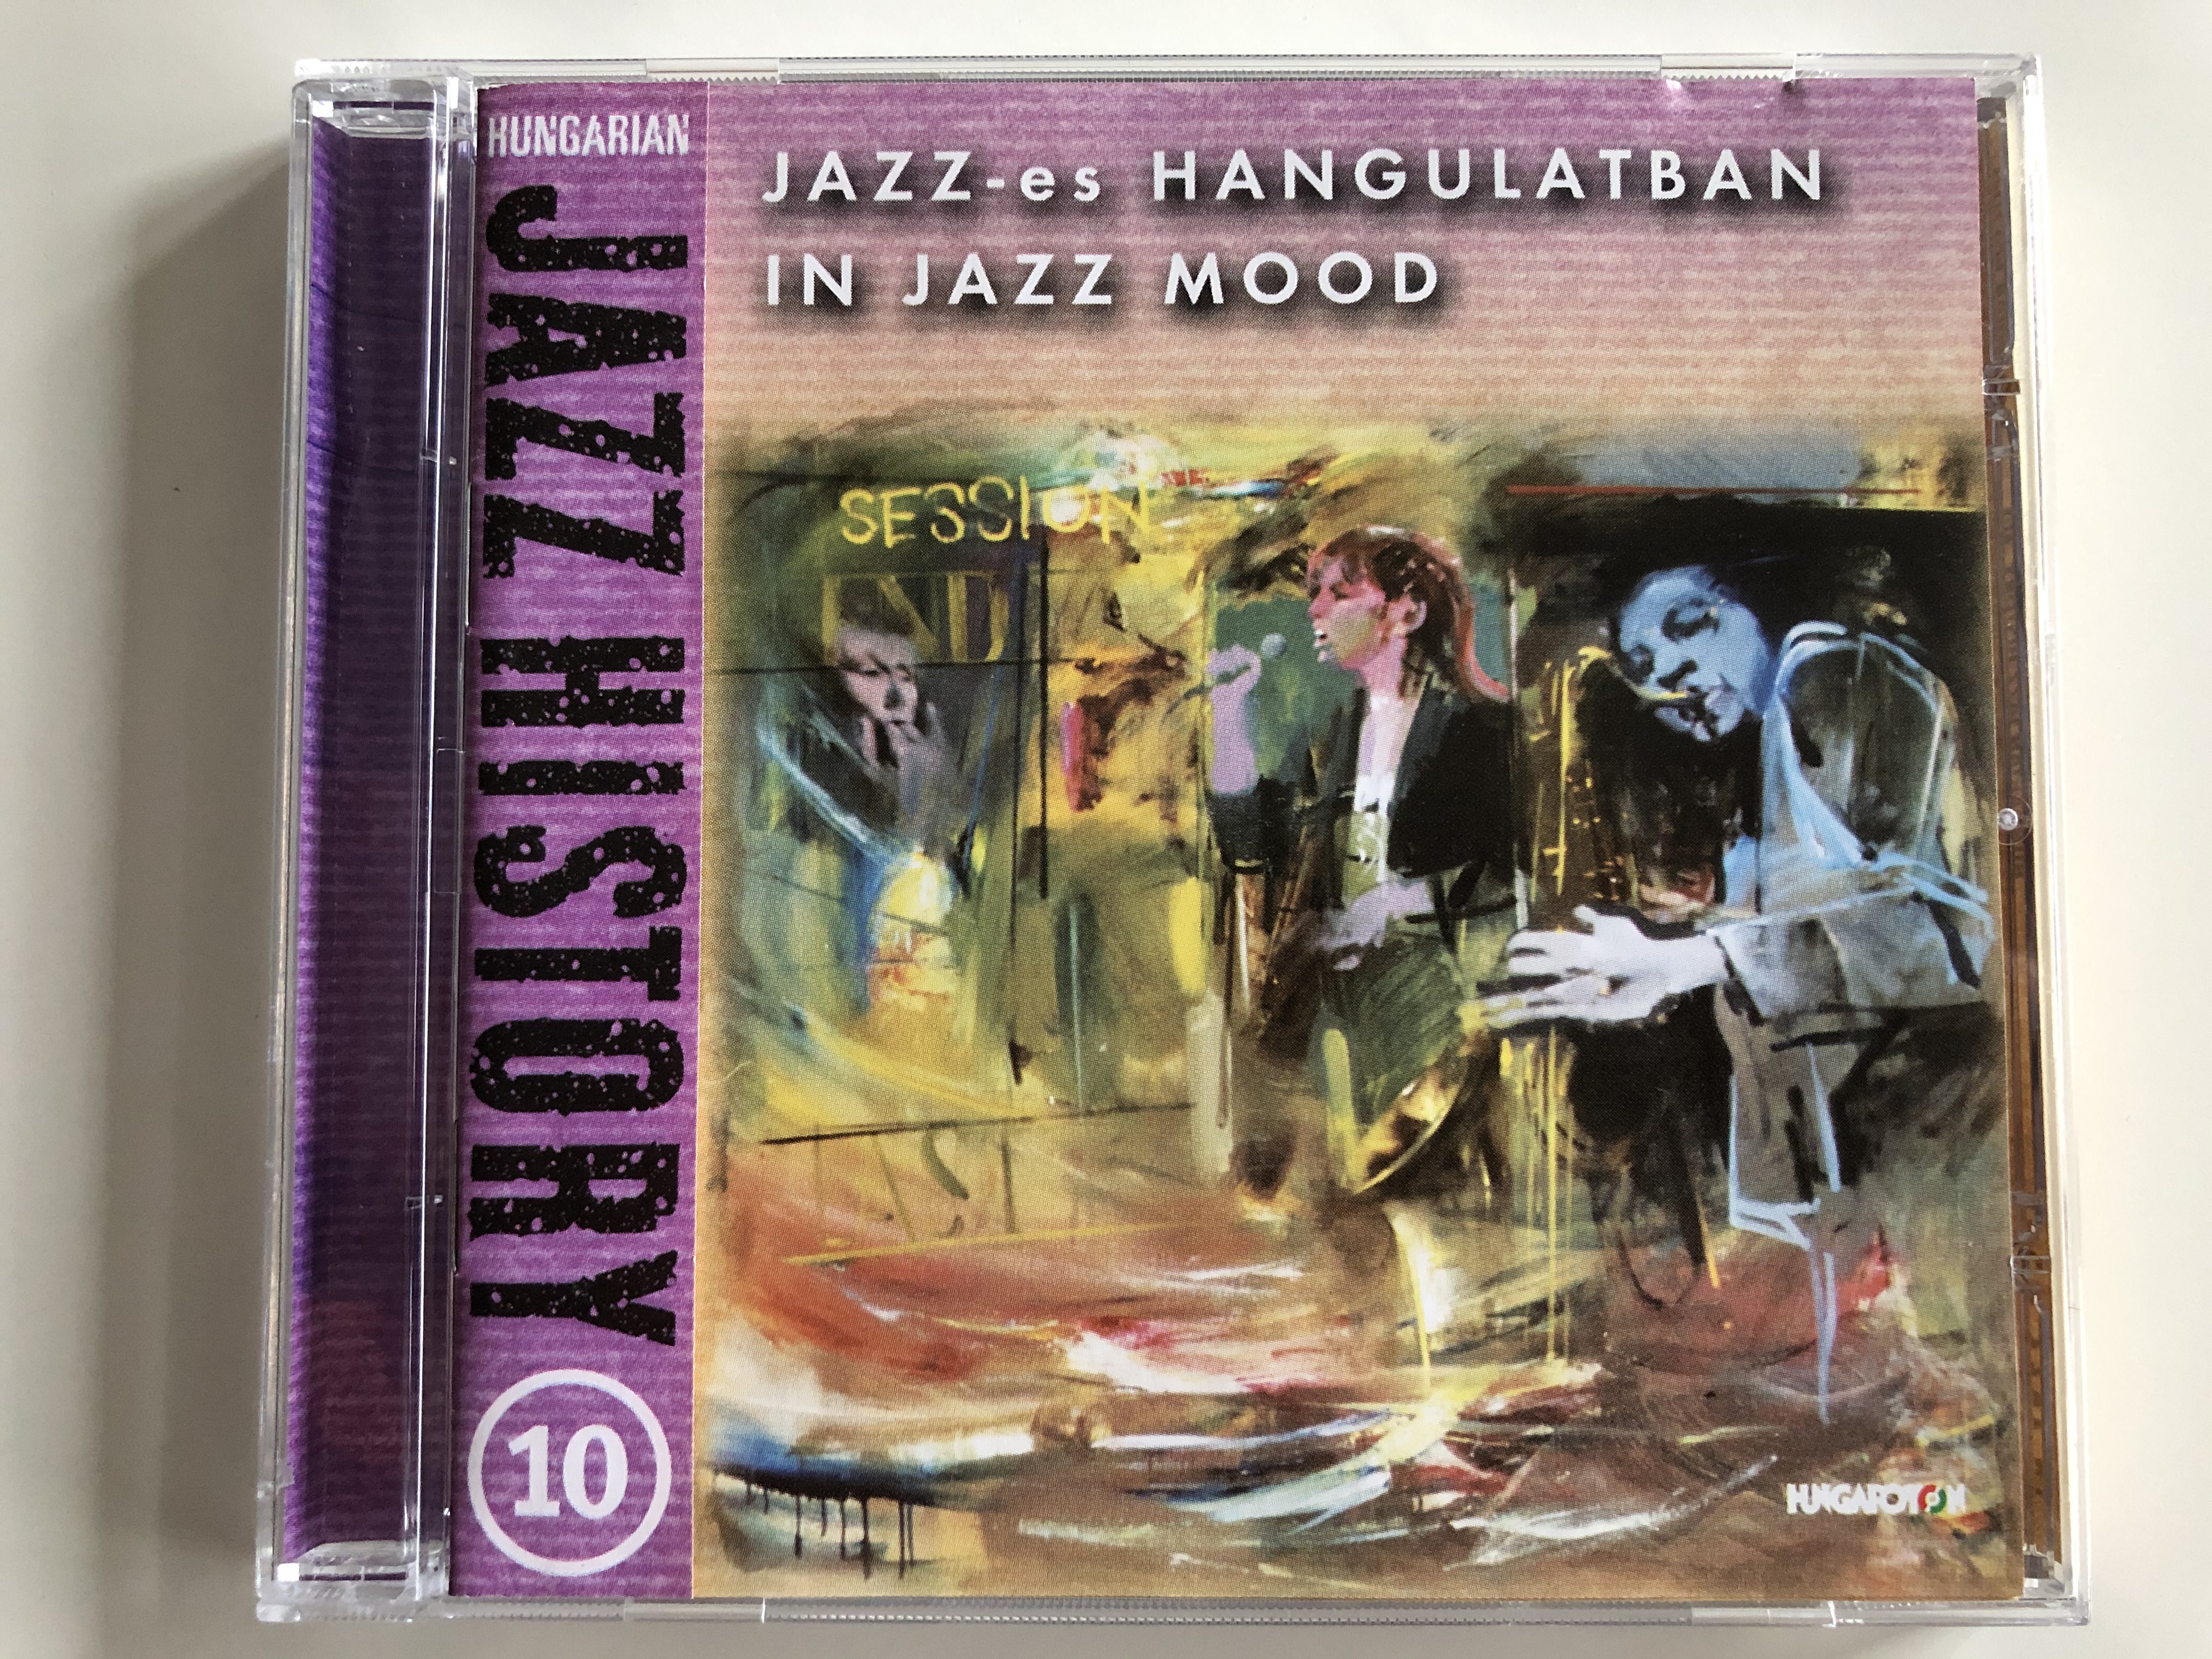 jazz-es-hangulatban-in-jazz-mood-hungarian-jazz-history-10-hungaroton-audio-cd-2002-hcd-71145-1-.jpg